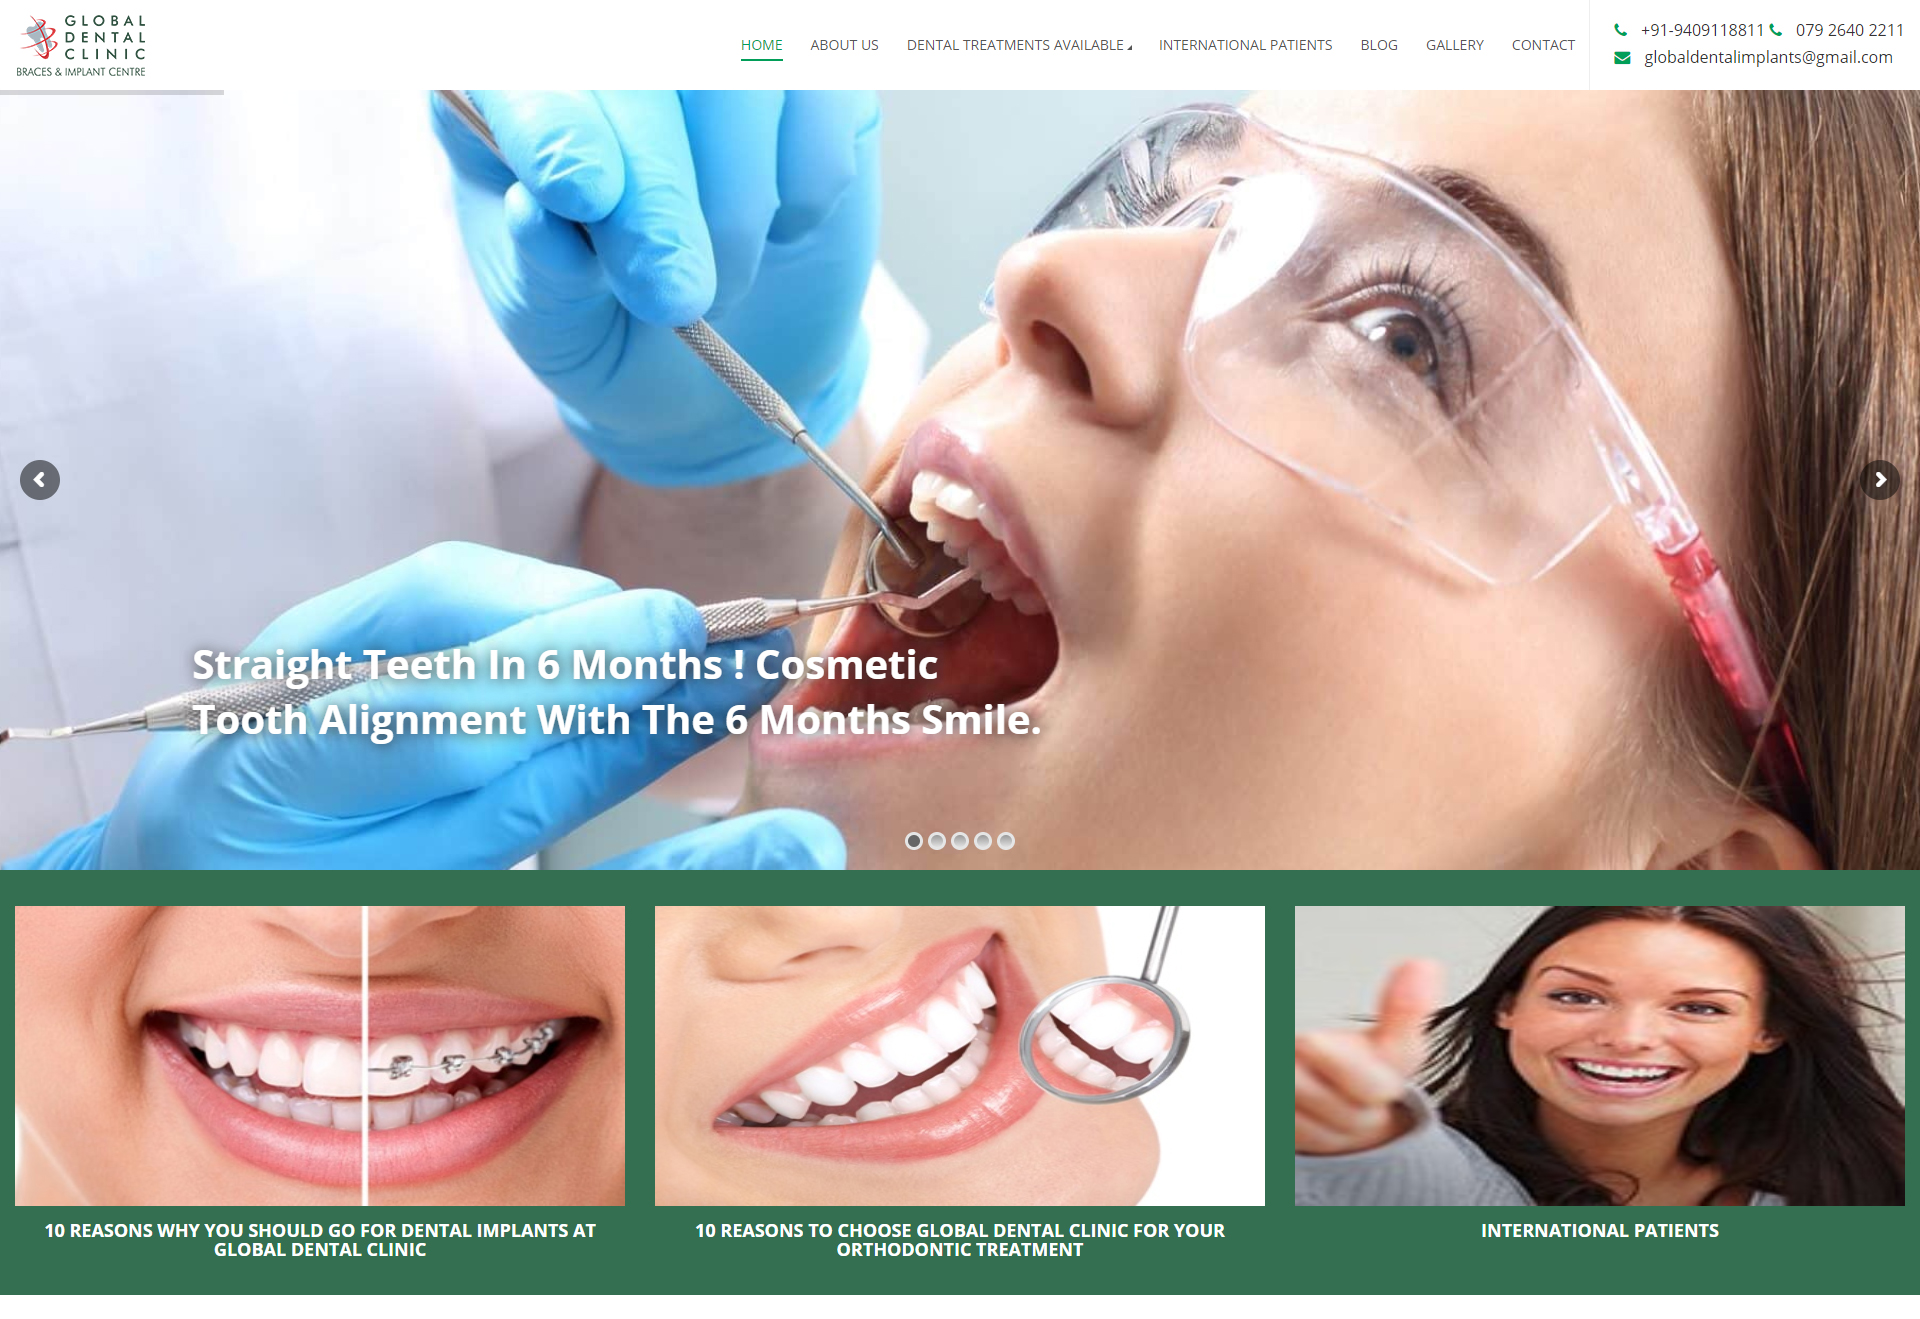 Global Dental Clinic